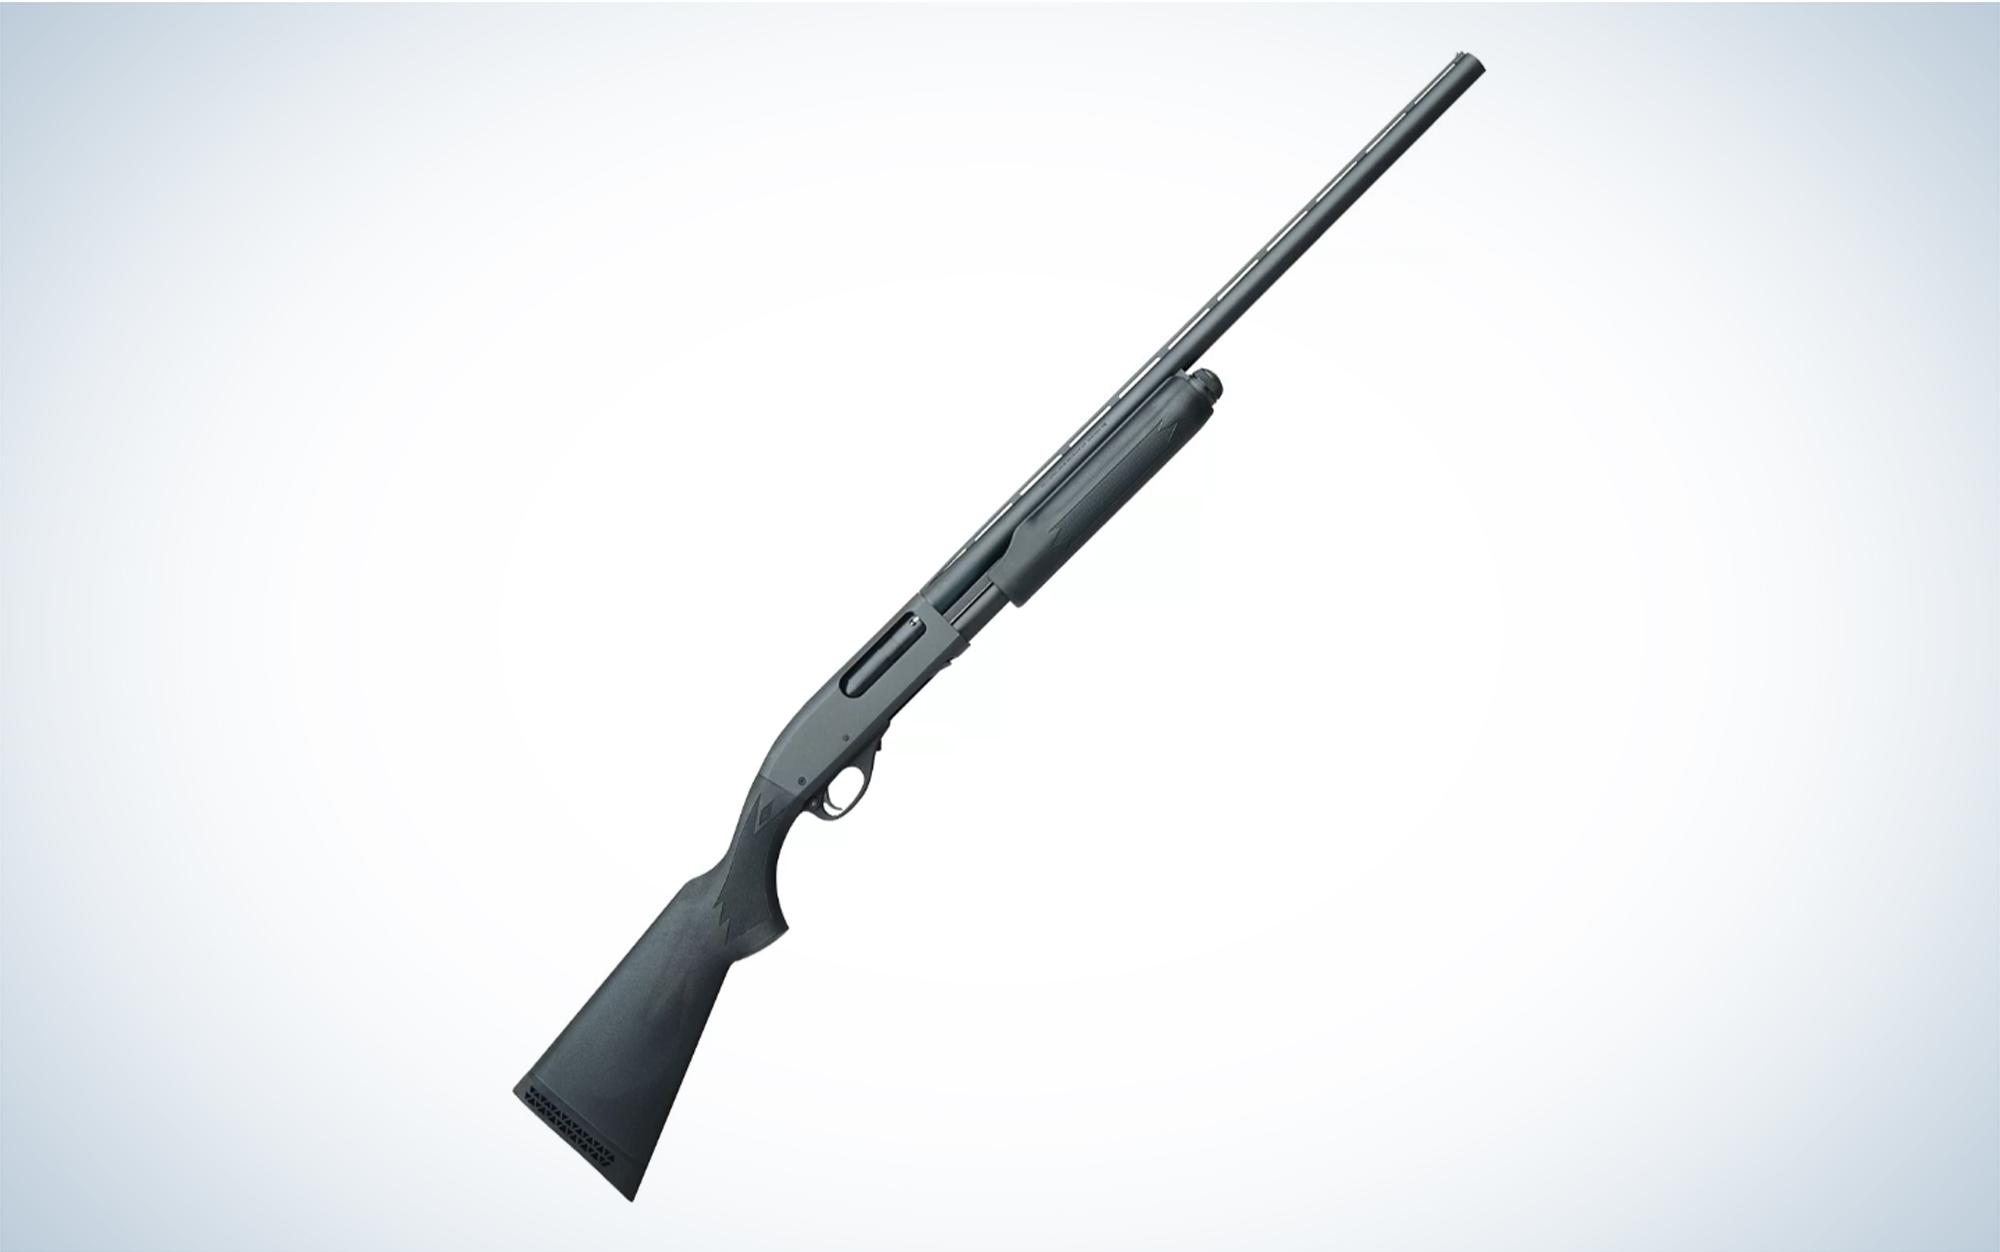 The Remington Model 870 pump-action shotgun features a synthetic stock.